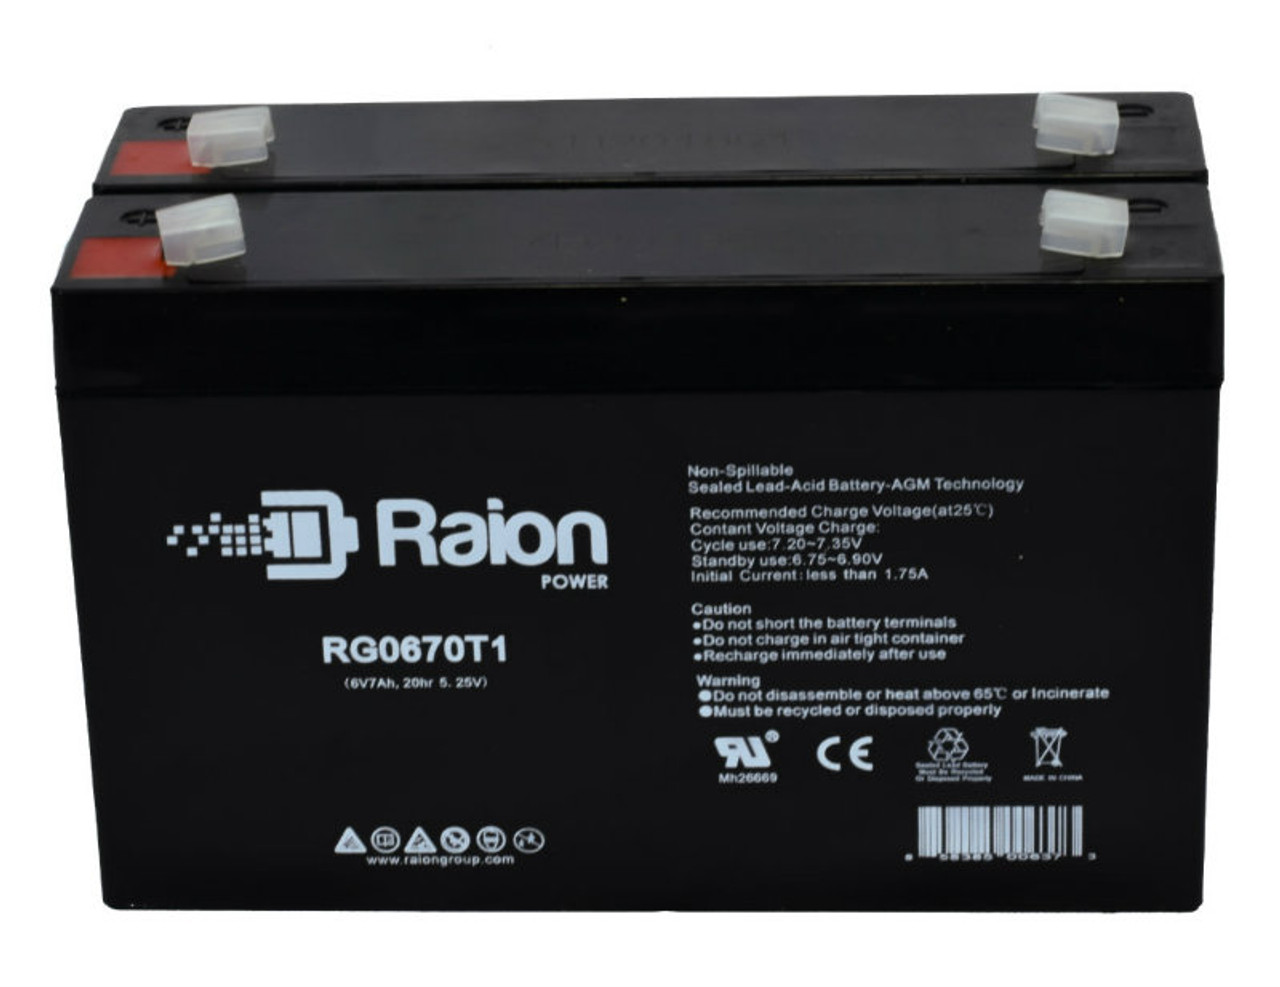 Raion Power RG0670T1 6V 7Ah Replacement Emergency Light Battery for Dual-Lite CVT3GW3I - 2 Pack